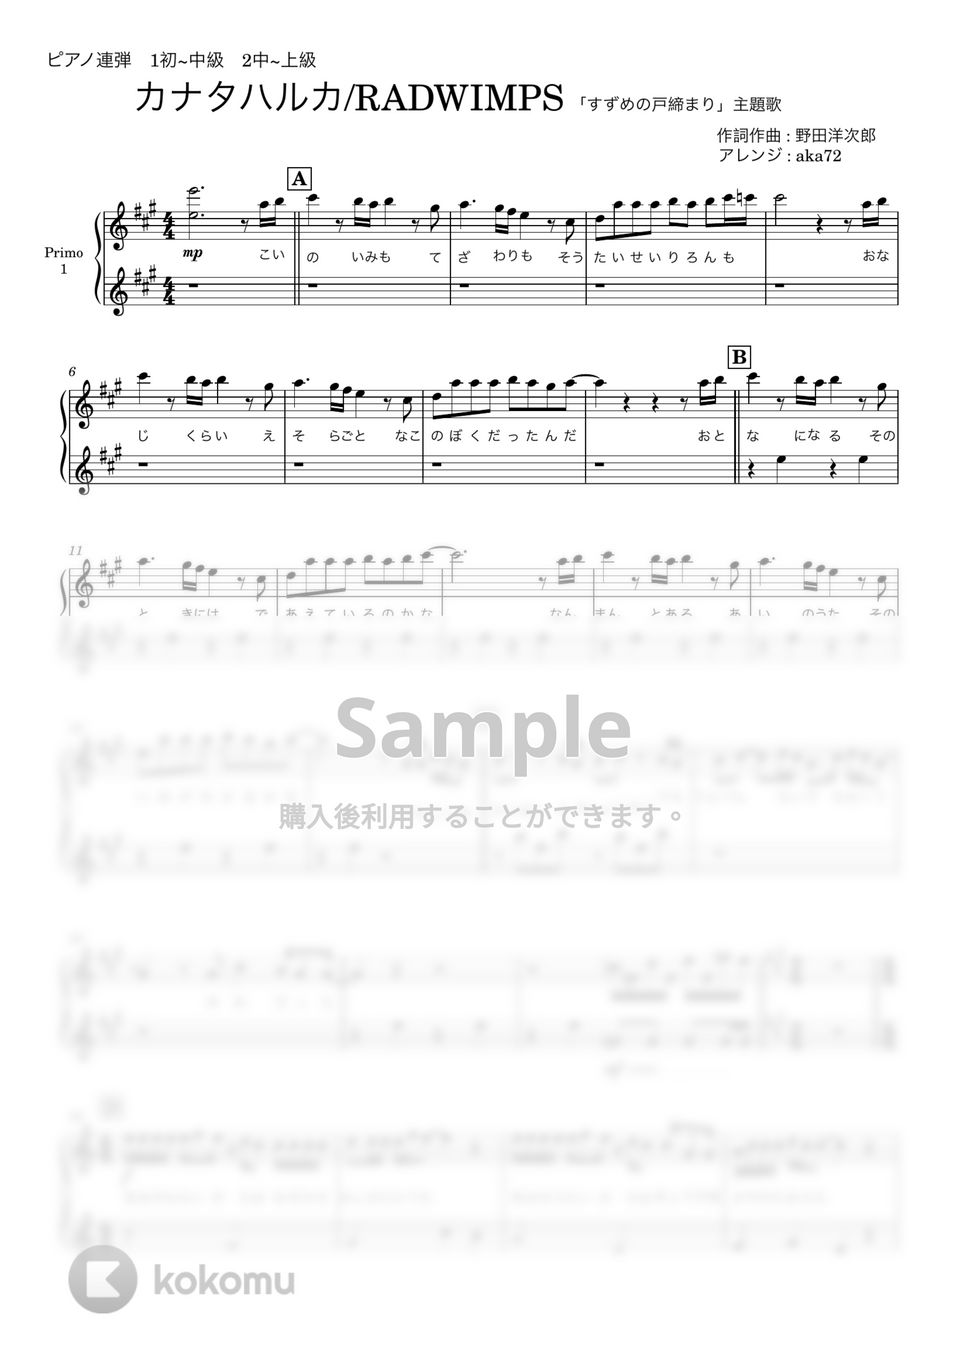 RADWIMPS - カナタハルカ/ 1初級、2中上級 (ピアノ連弾/ 1初級、2中上級) by aka72